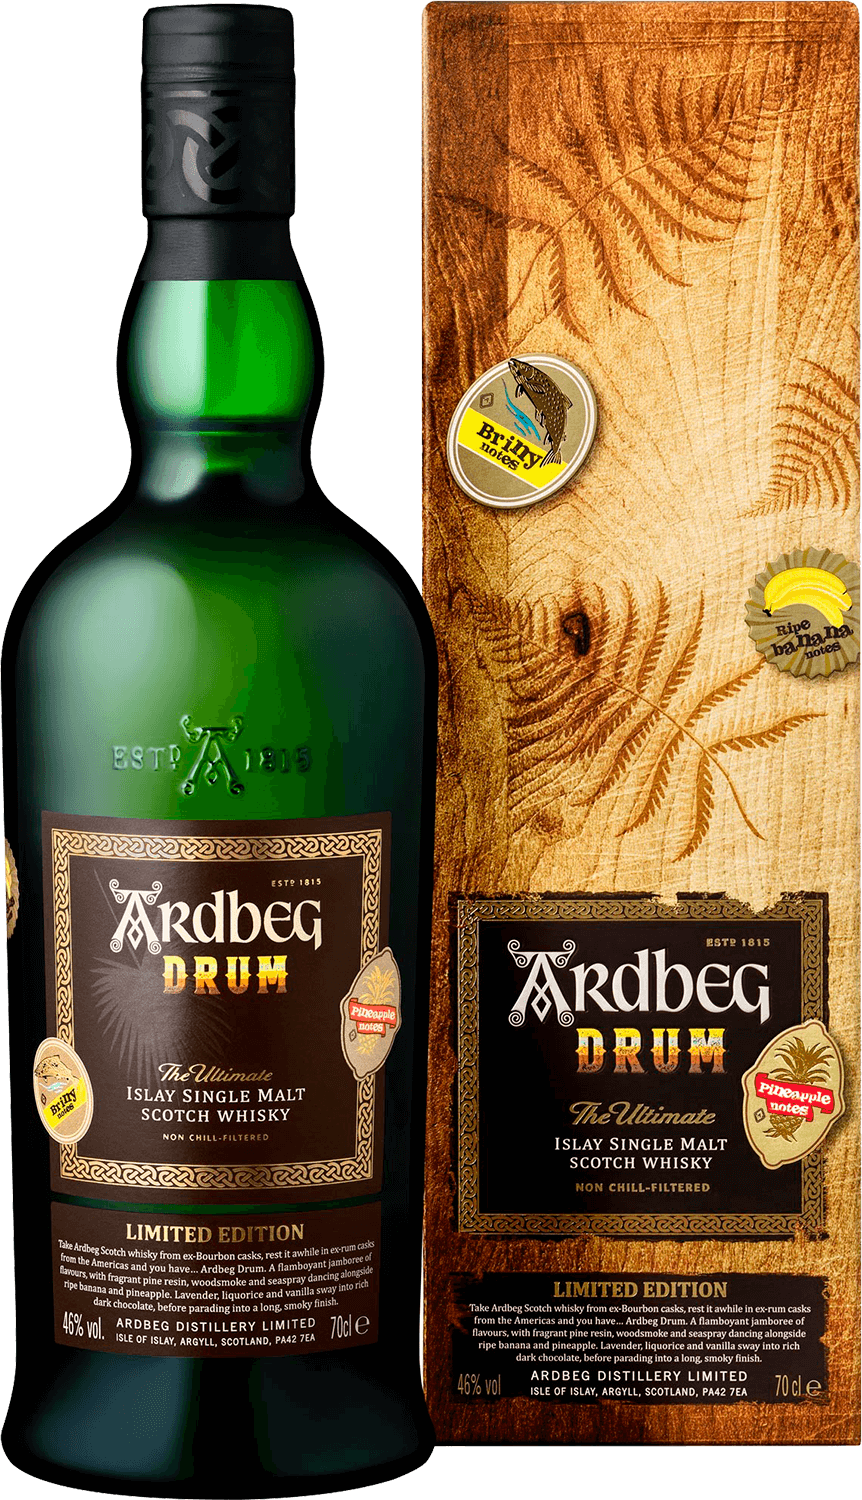 Ardbeg Drum Islay Single Malt Scotch Whisky (gift box) bunnahabhain aonadh islay single malt scotch whisky